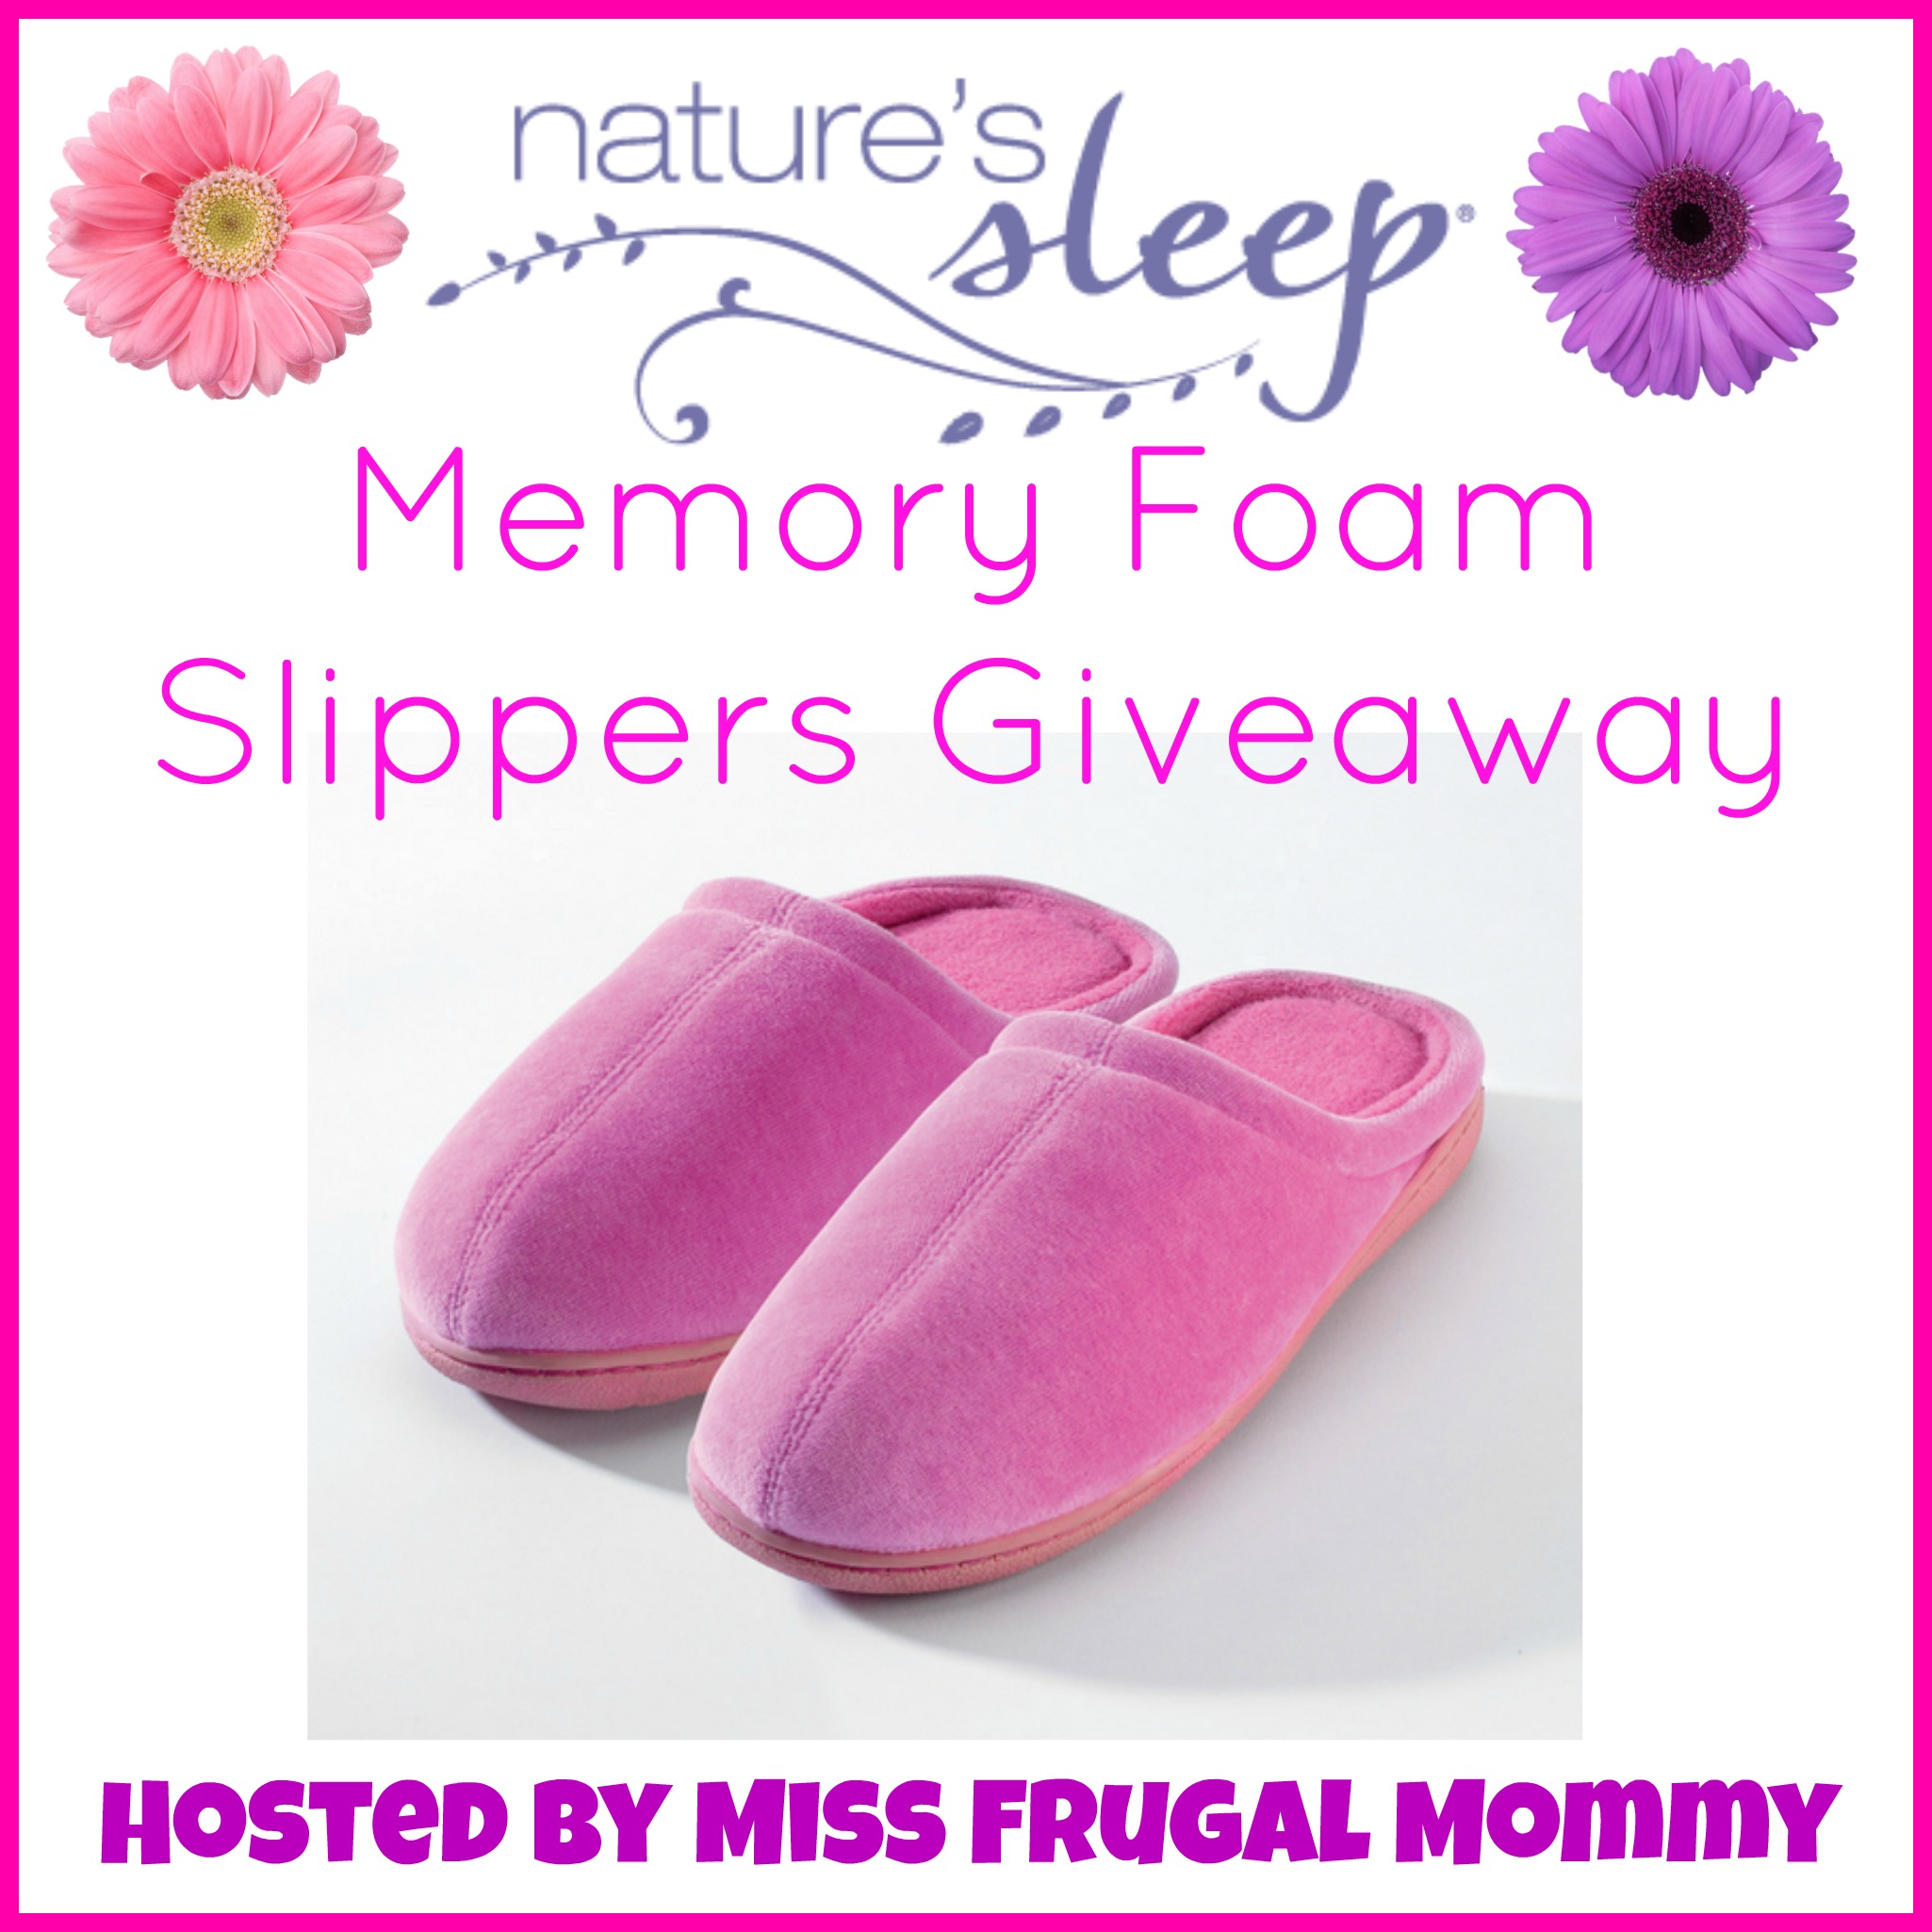 https://missfrugalmommy.com/wp-content/uploads/2014/03/memory-foam-slippers-giveaway.jpg